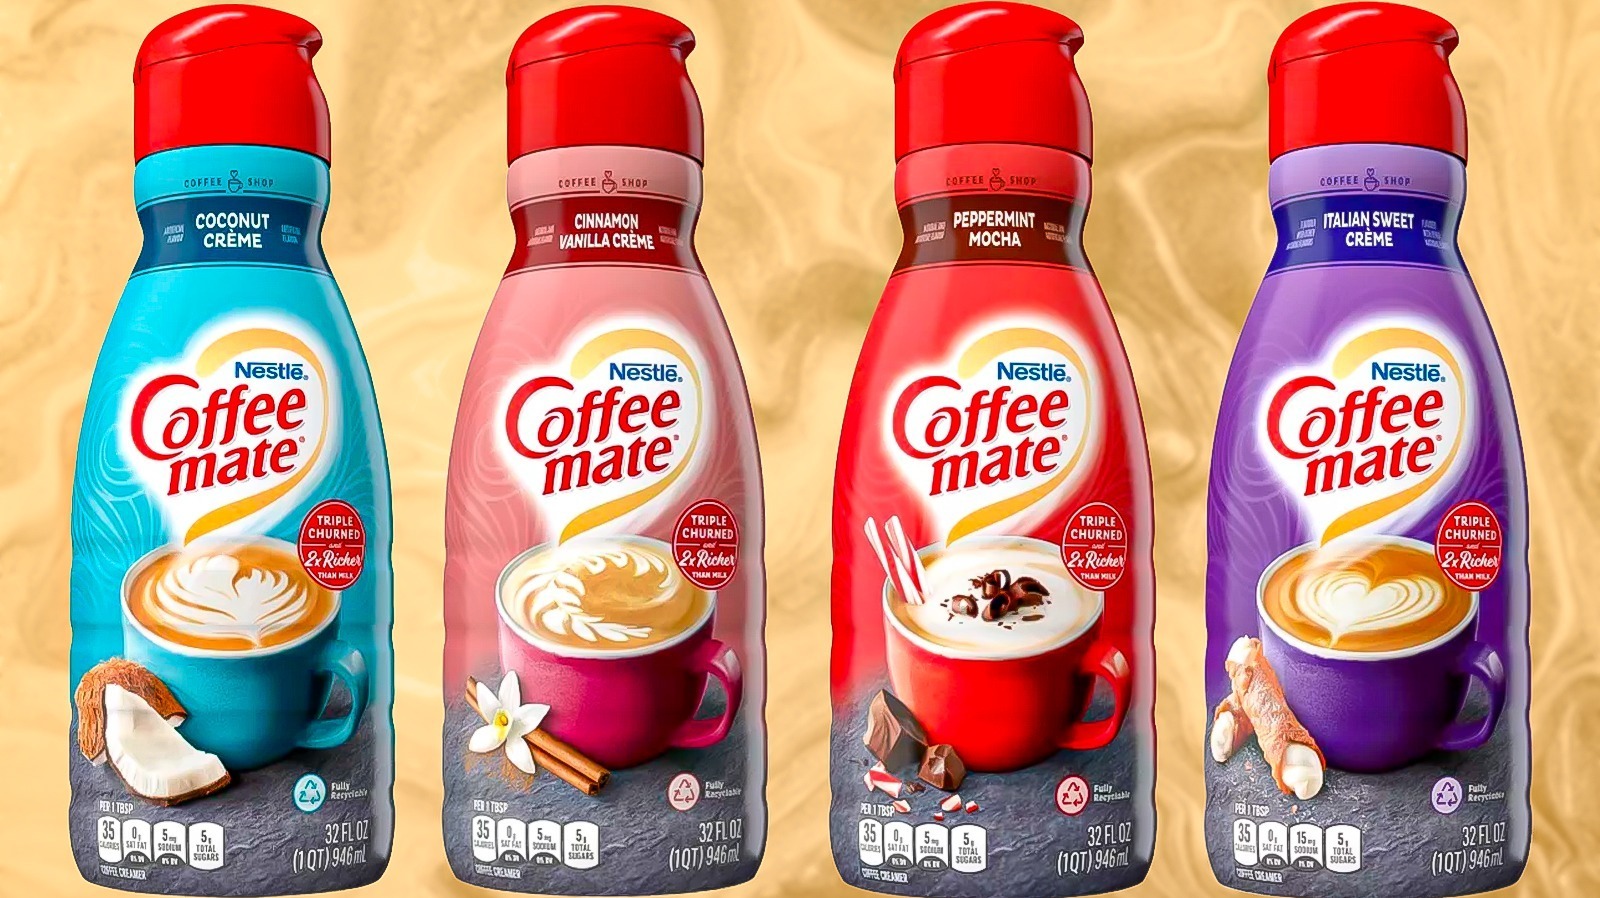 Nestle Coffeemate Spiced Latte Liquid Coffee Creamer 32 fl oz Bottle, Creamers